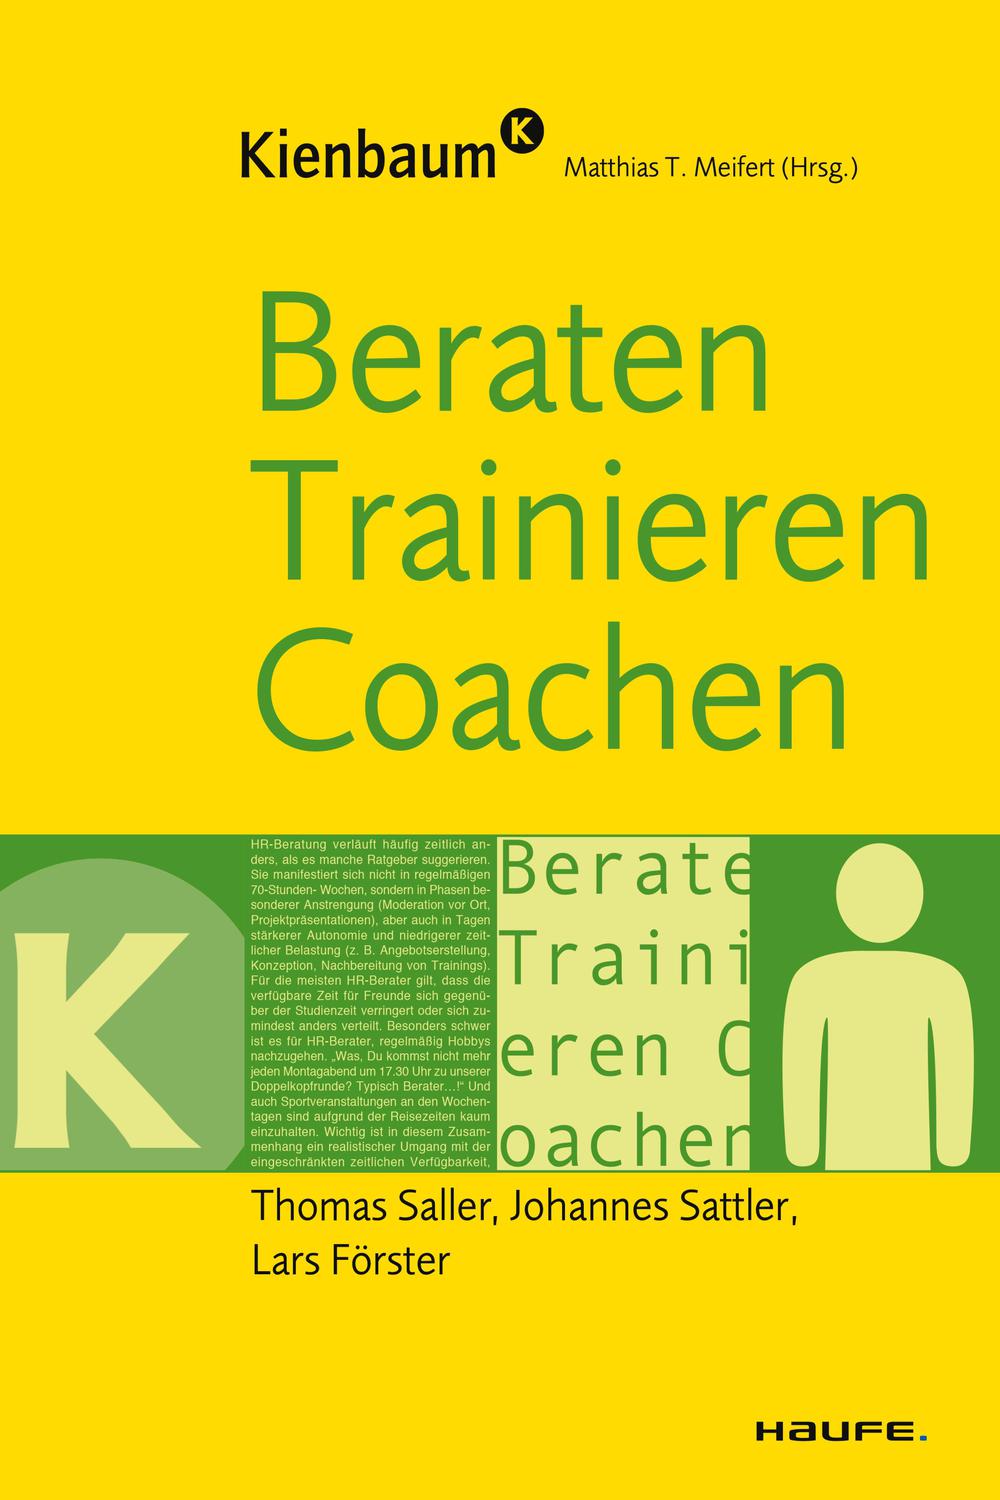 Beraten, Trainieren, Coachen - Thomas Saller, Johannes Sattler, Lars Förster